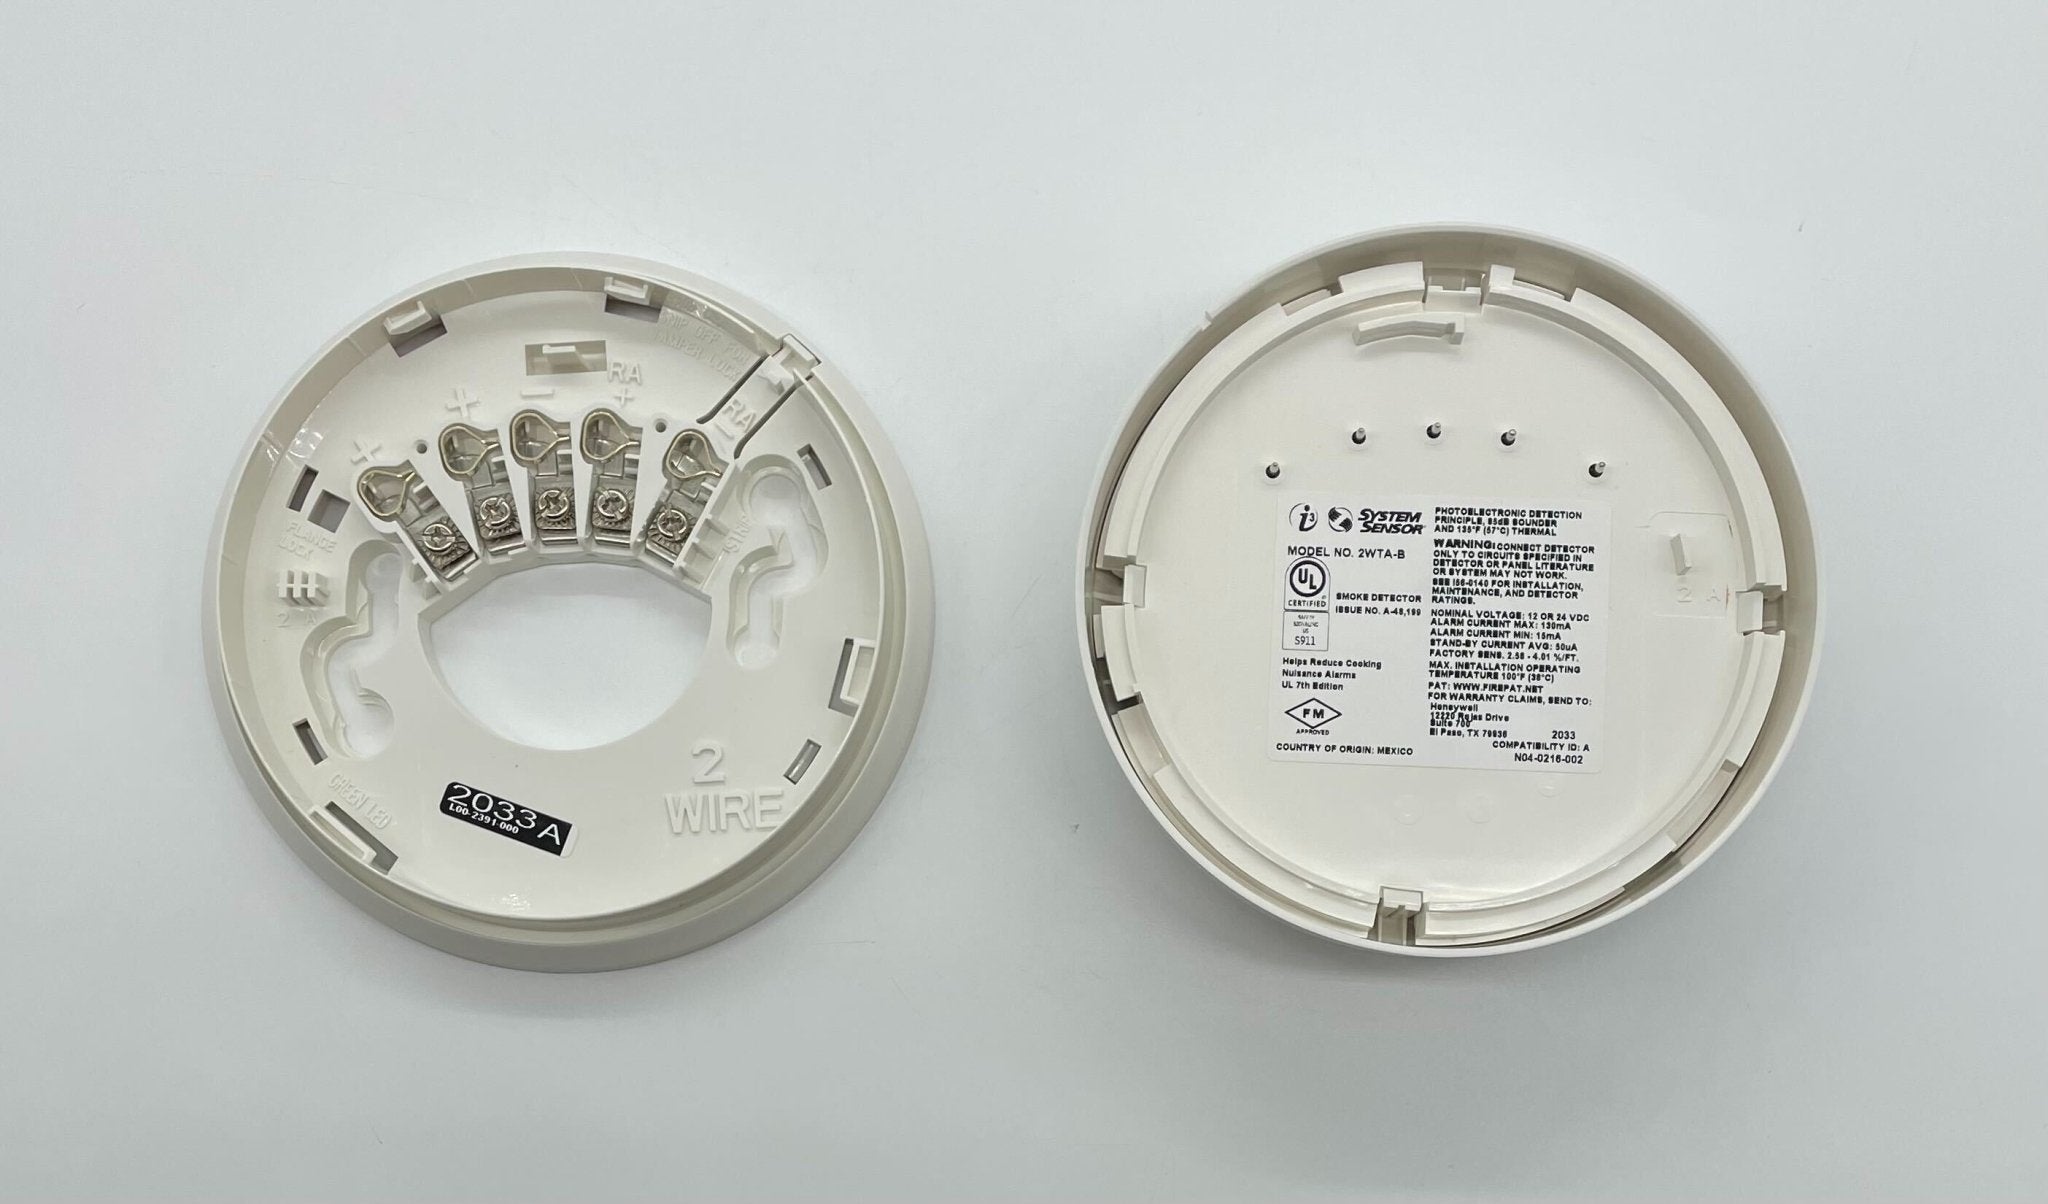 System Sensor 2WTA-B - The Fire Alarm Supplier